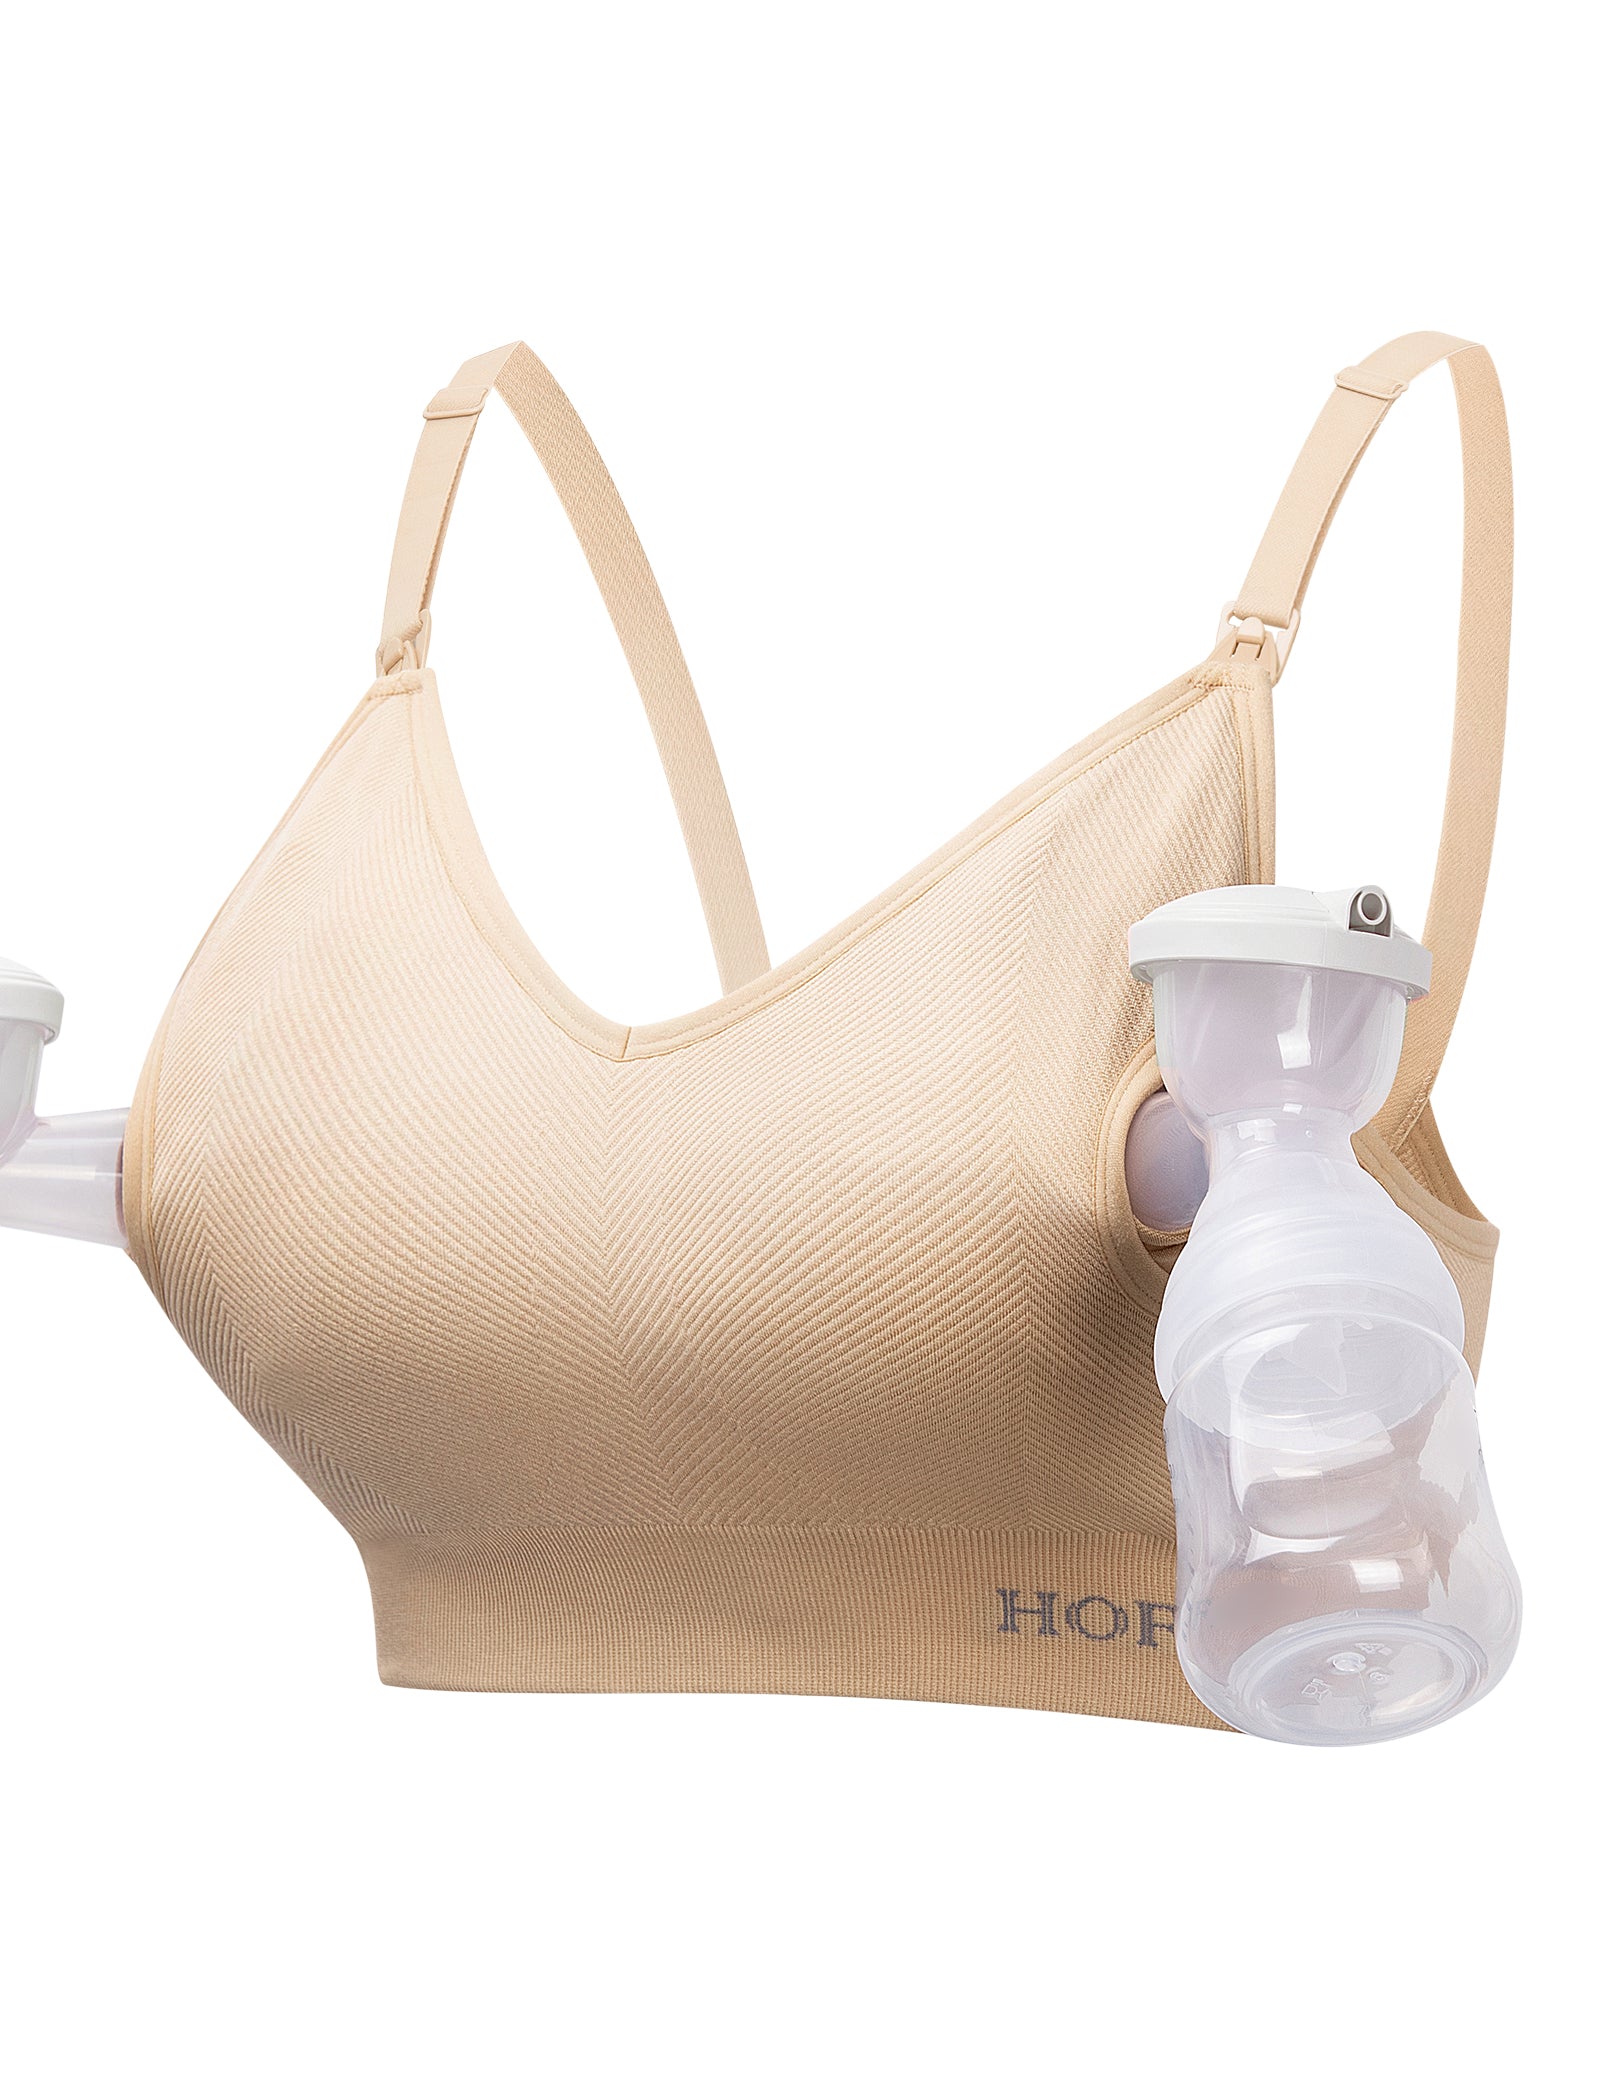 2 Pieces Hands-Free Pumping Bra, Adjustable Zipper Breast Feeding Bra, Small